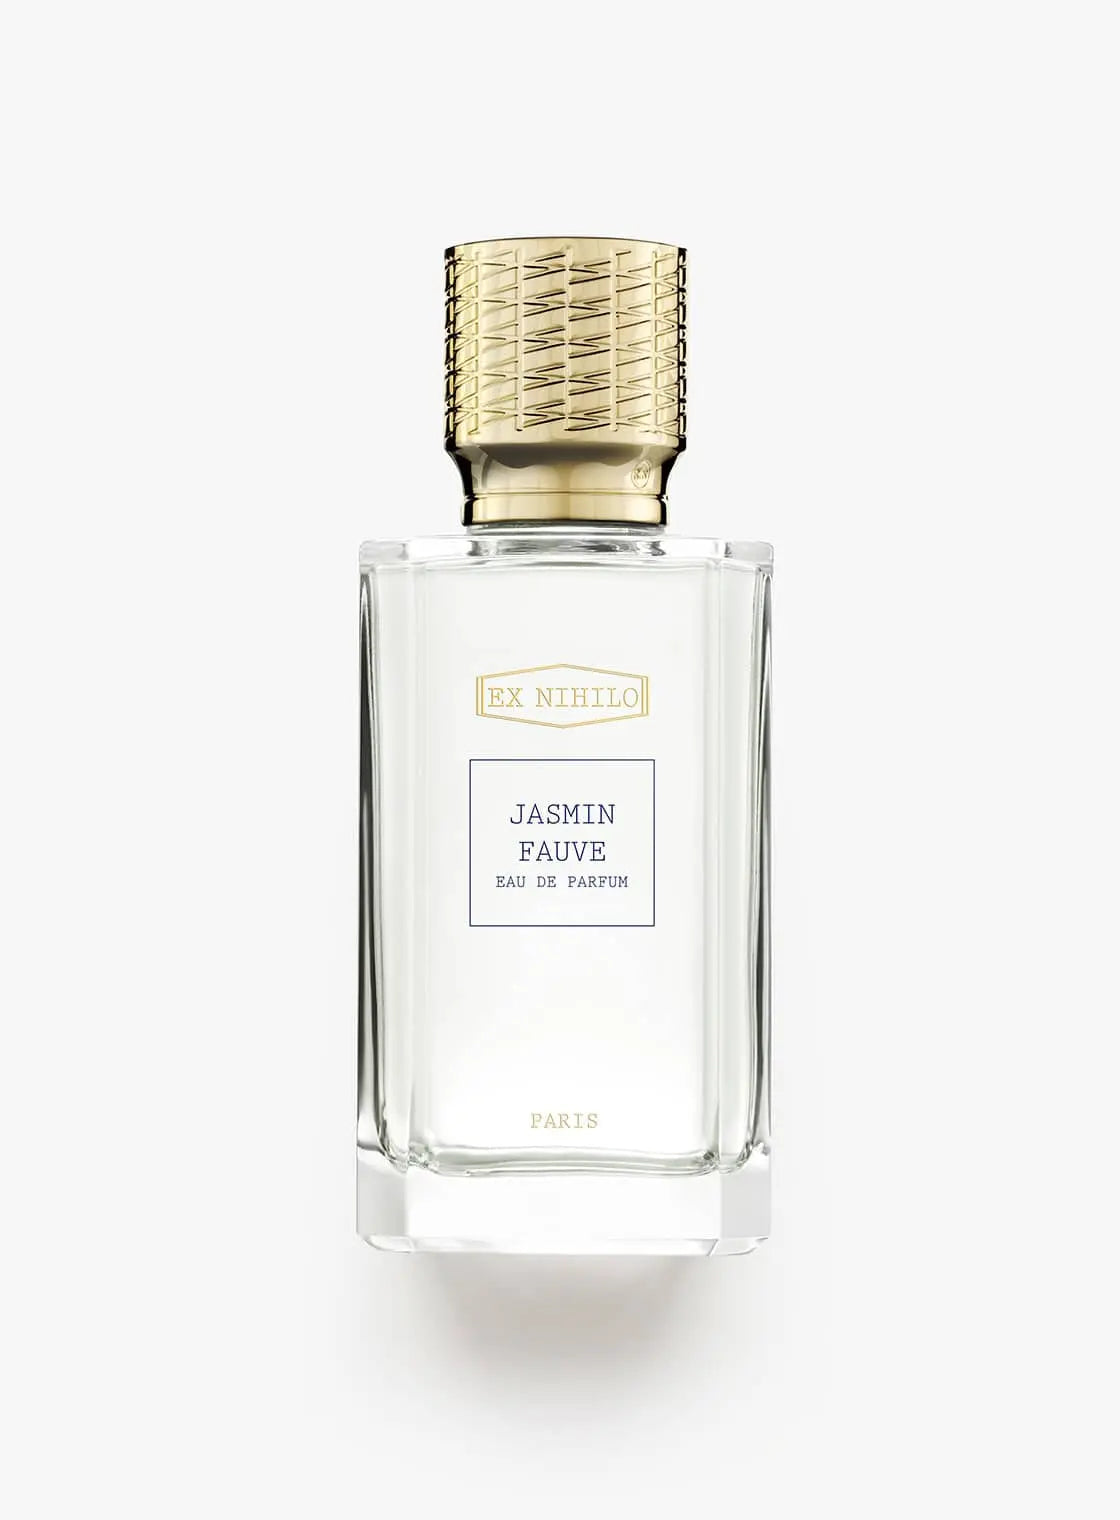 Ex nihilo Jasmin Fauve eau de parfum - 50 ml